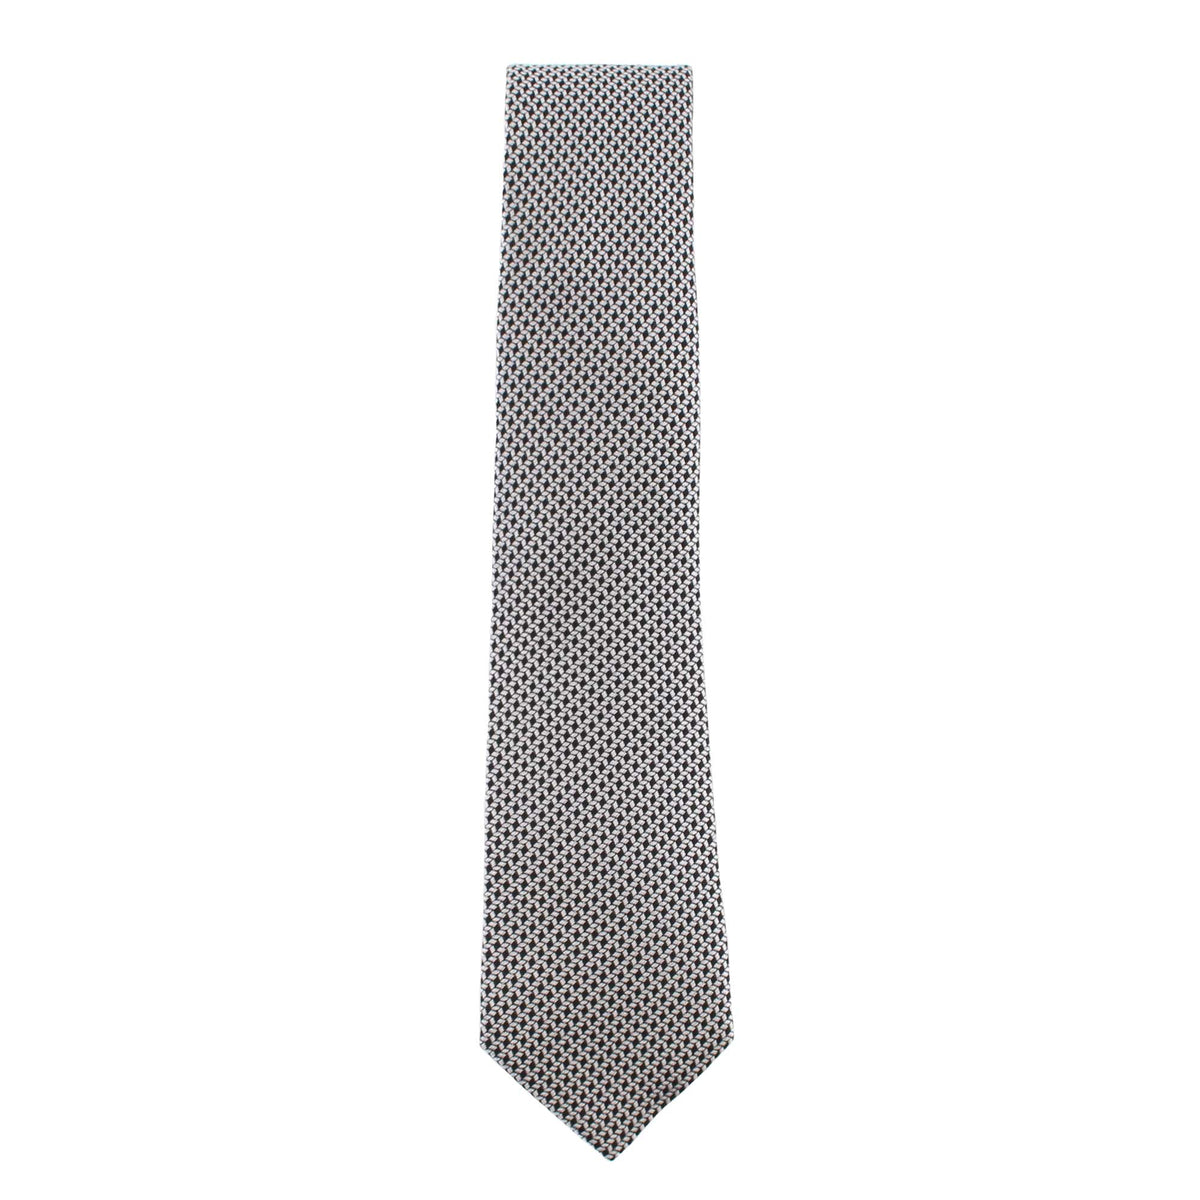 Cravate, motif de petits losanges